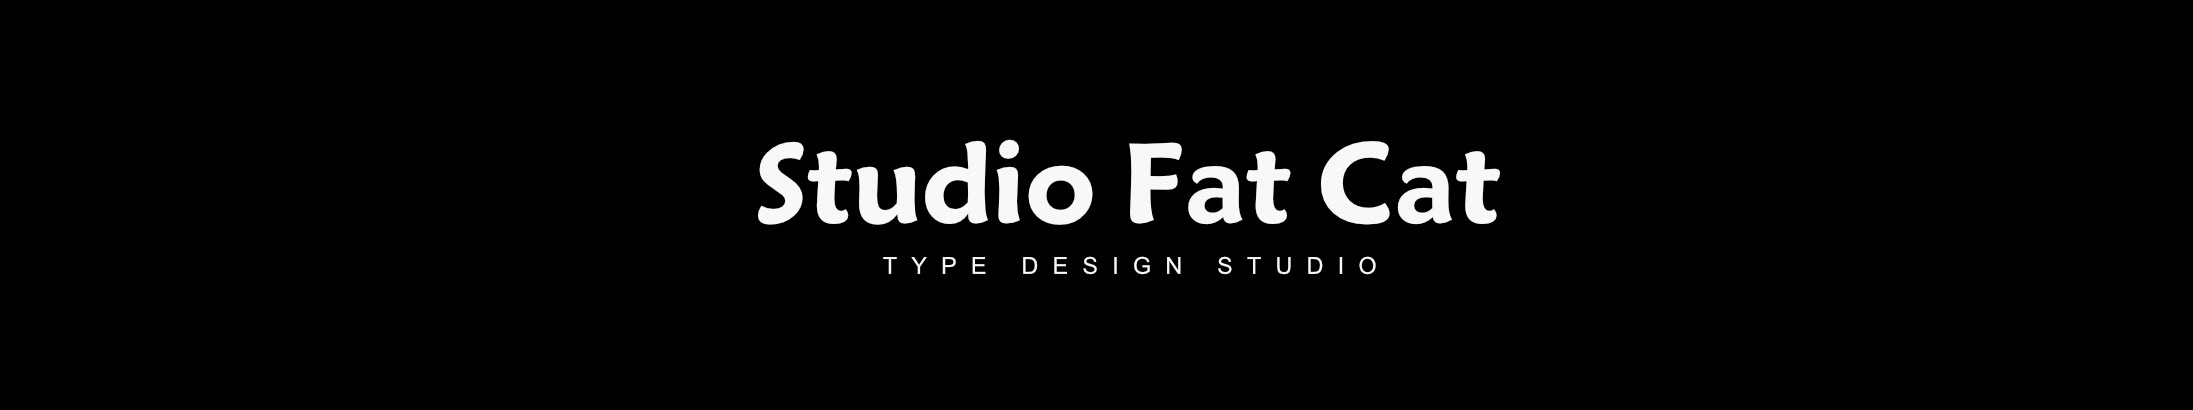 Studio Fat Cat's profile banner